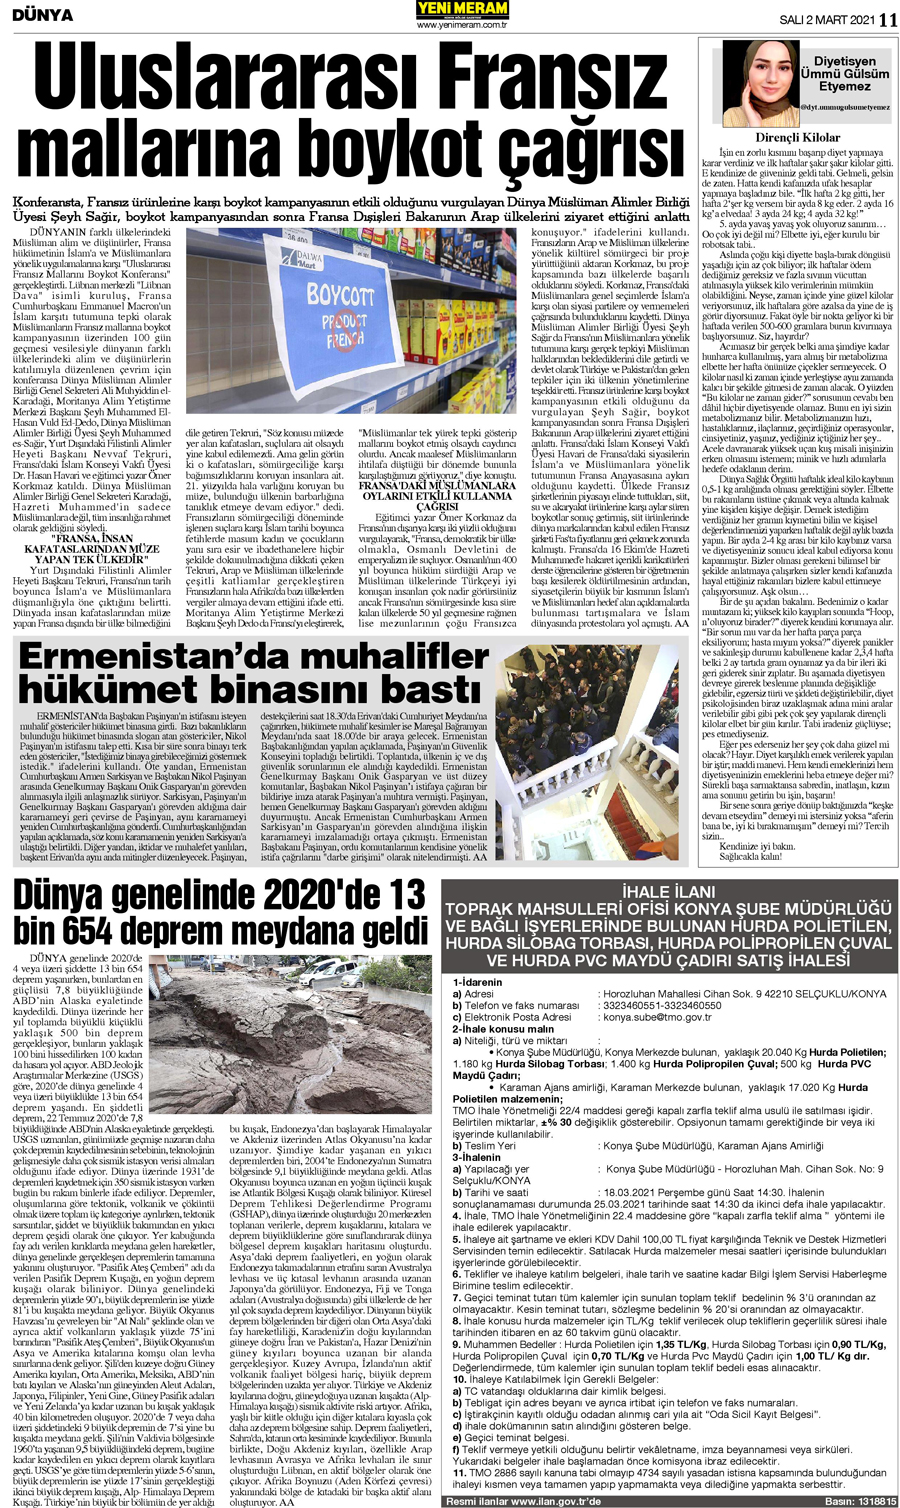 2 Mart 2021 Yeni Meram Gazetesi